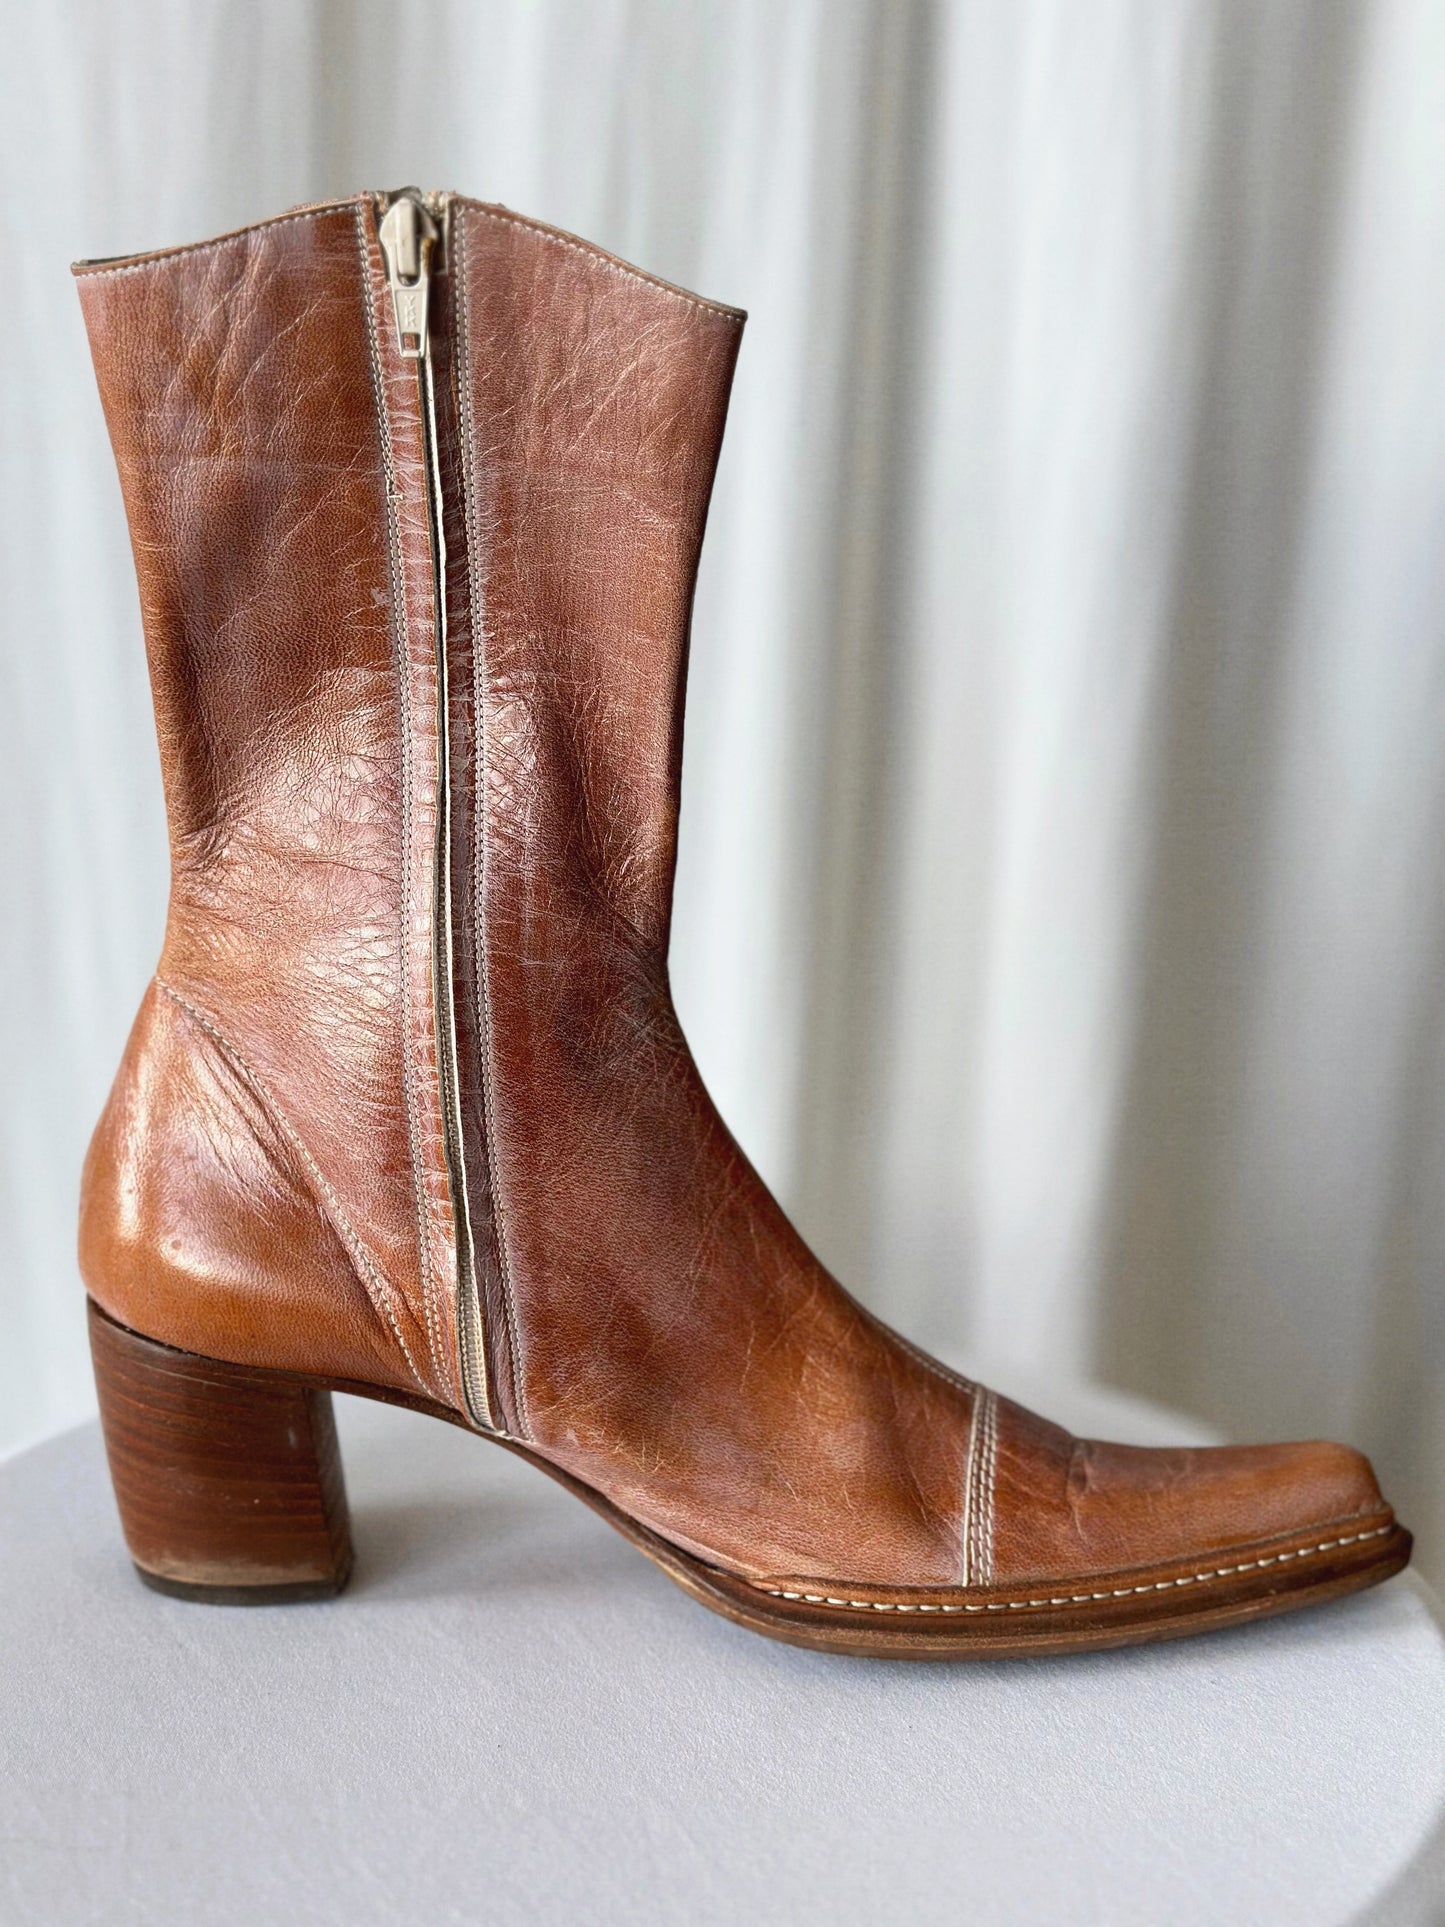 Vintage Brown Boots [39]